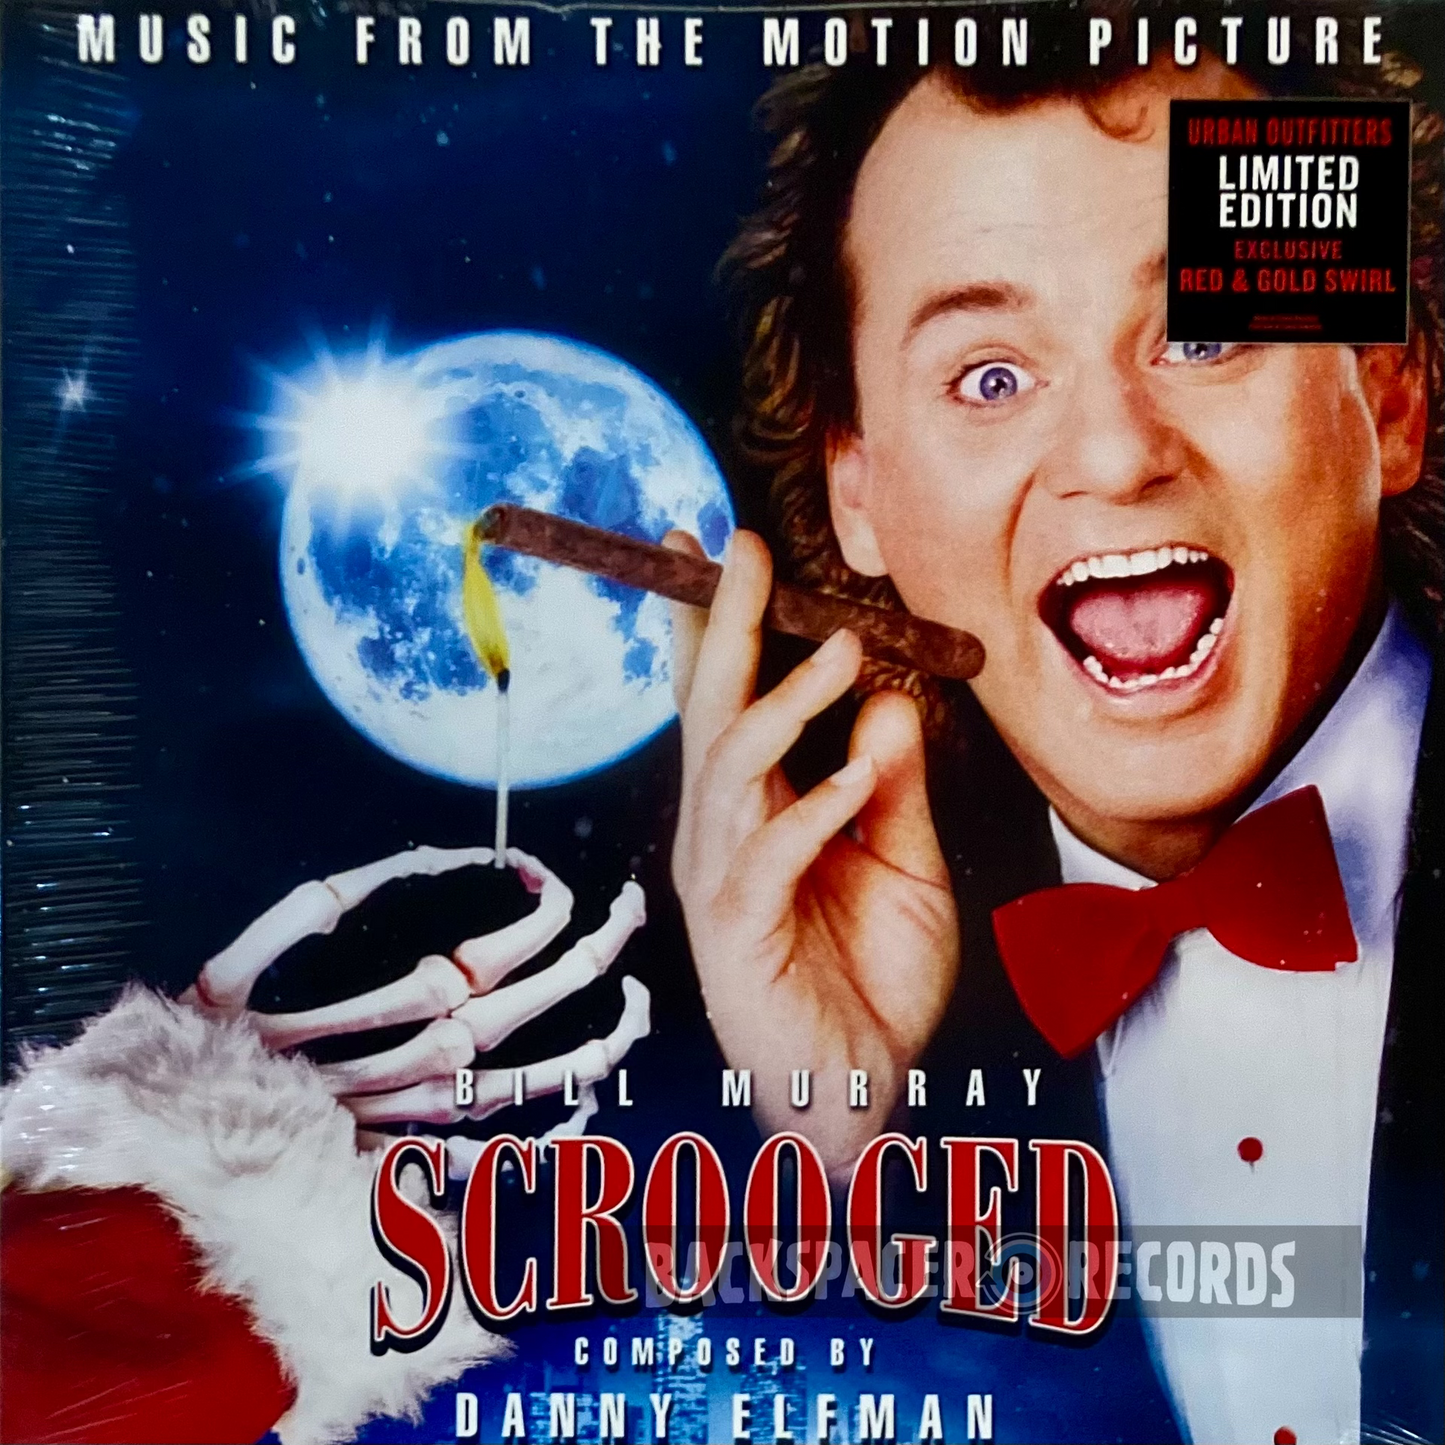 Danny Elfman ‎– Scrooged: Original Motion Picture Score LP (Sealed)